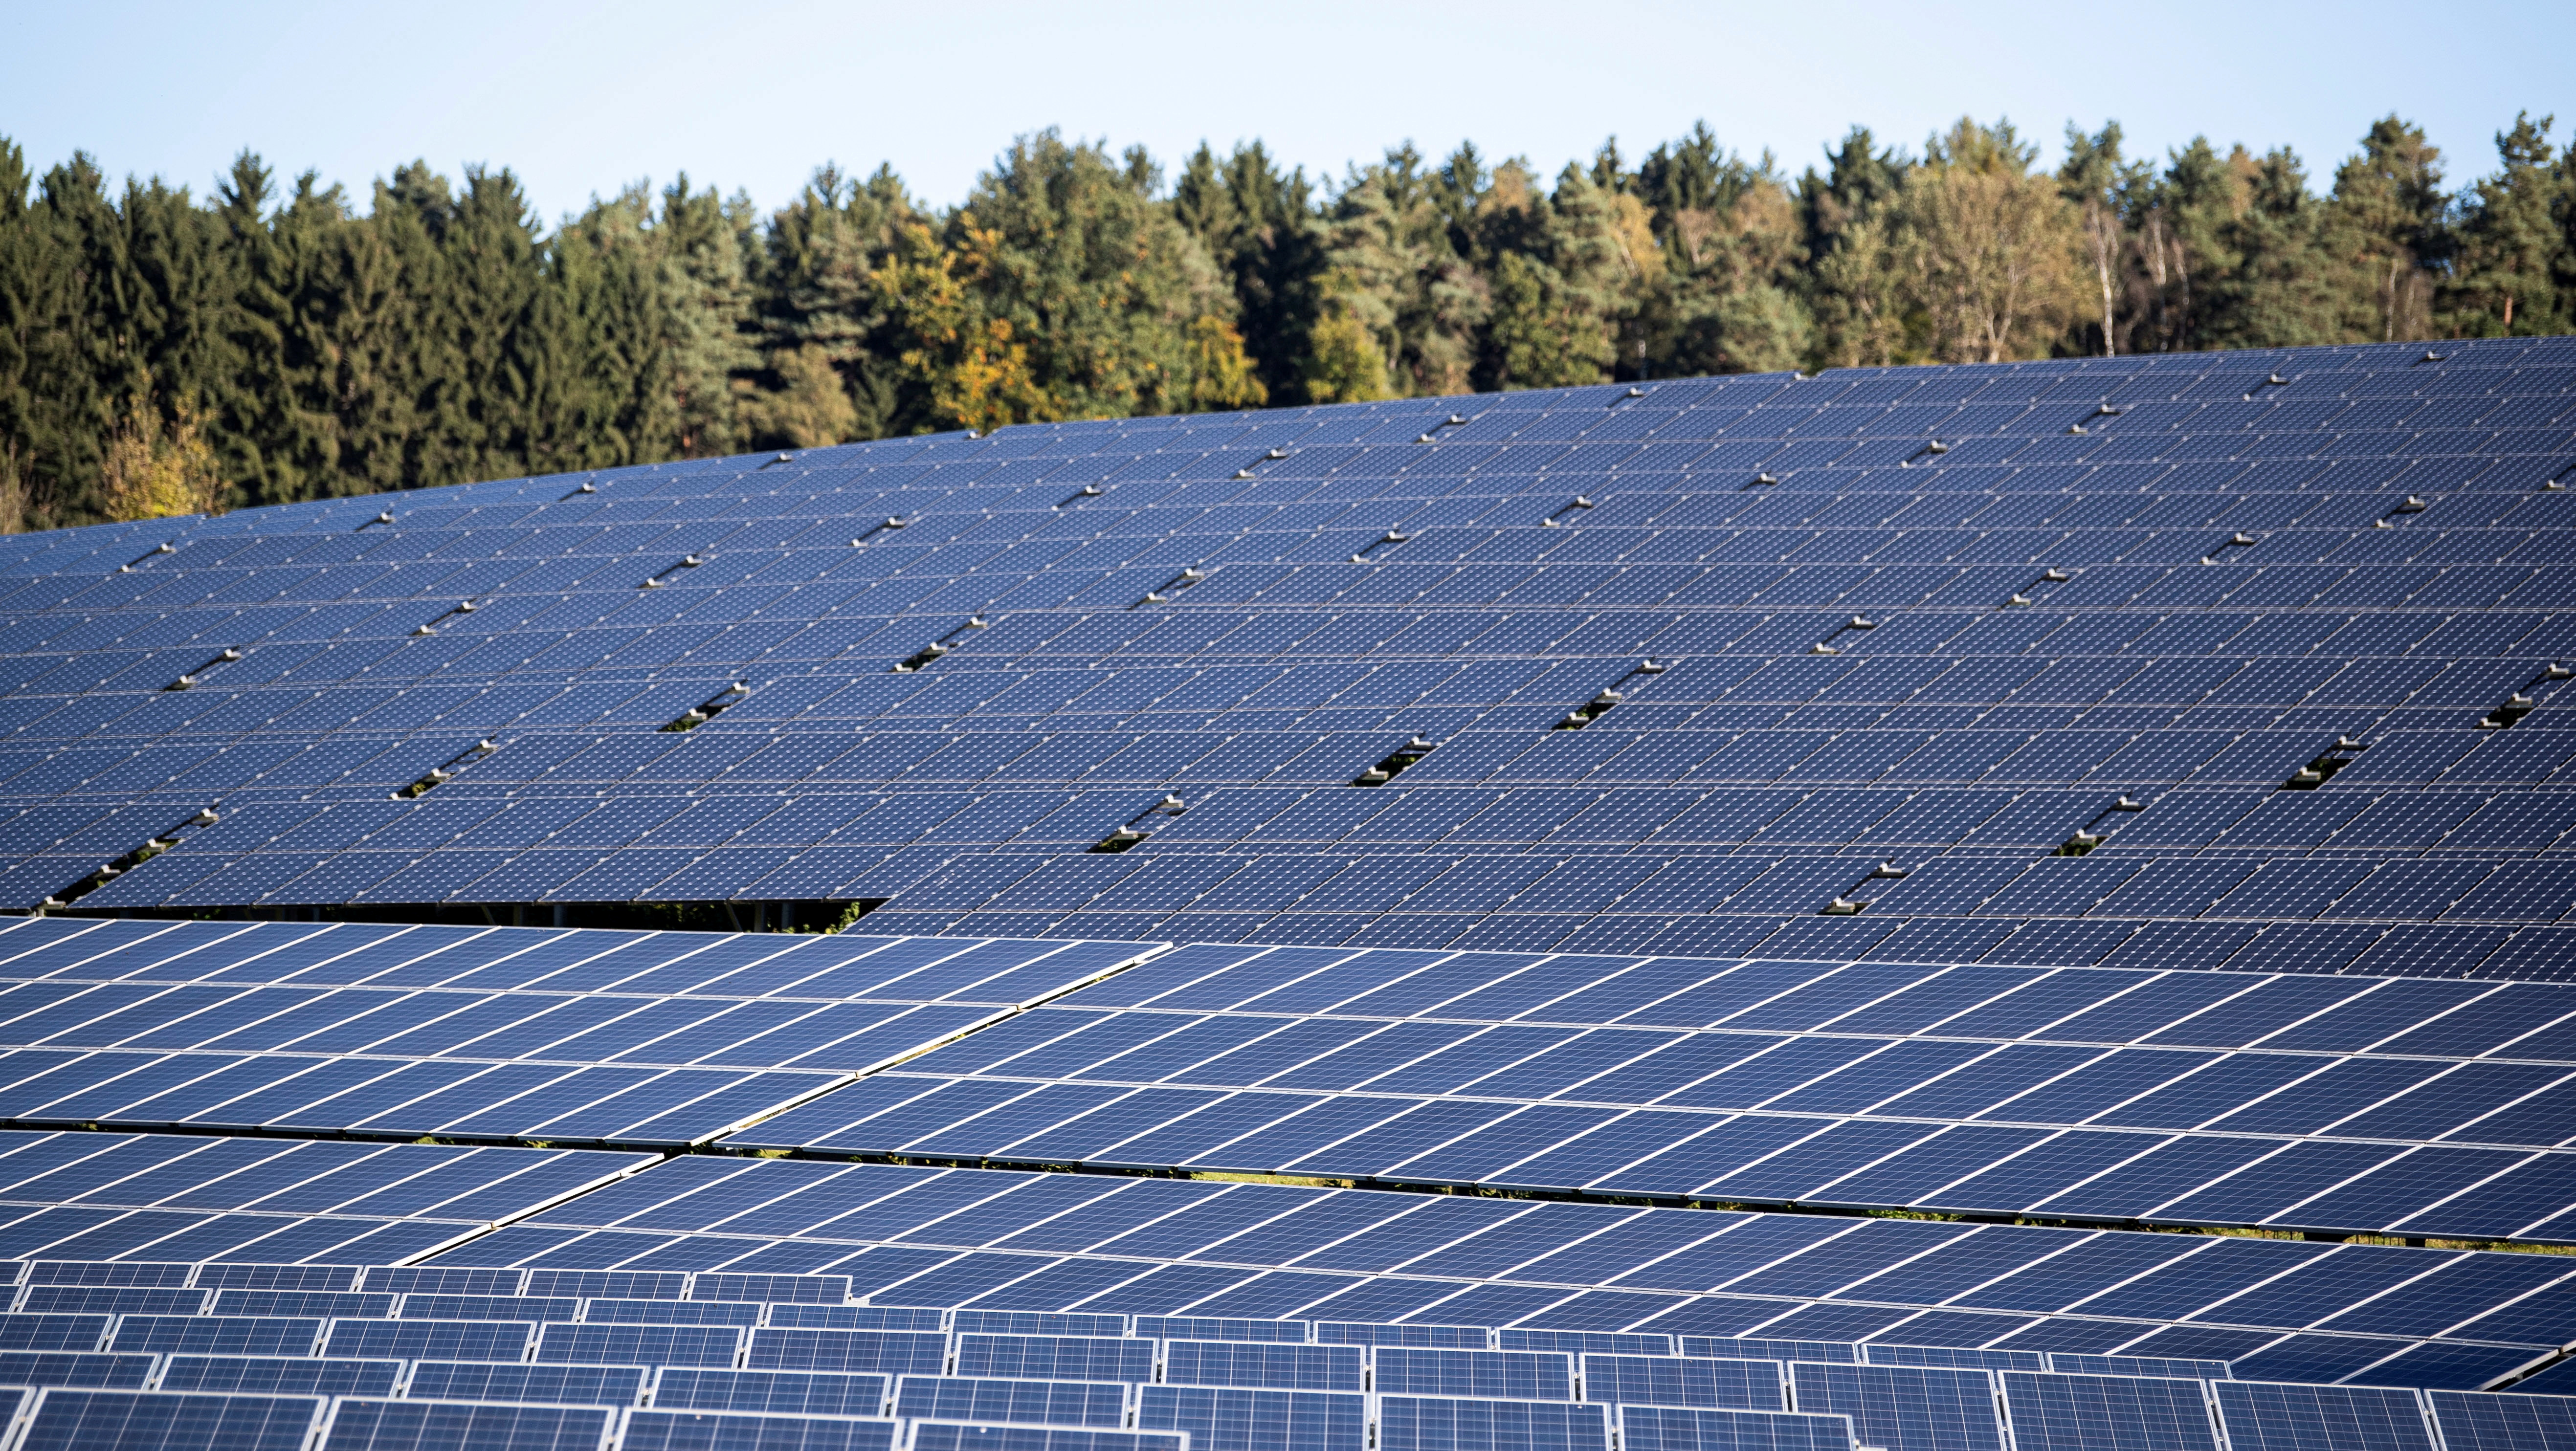 A solar power plant with photovoltaic systems is seen near Mainburg